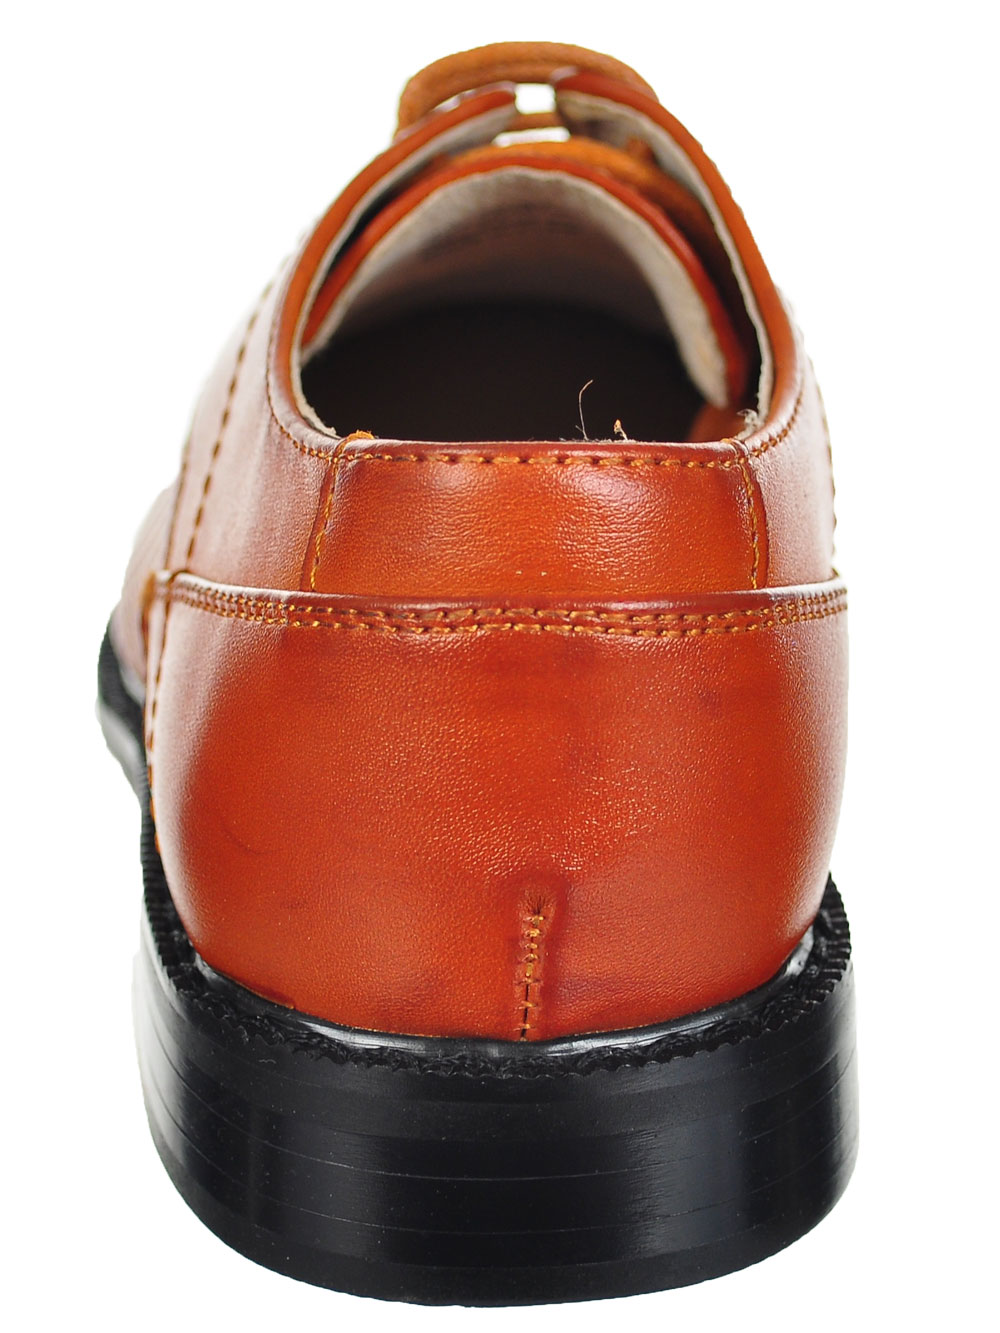 Joseph Allen Boys' Dress Shoes (Sizes 5 -8) - tan, 7 youth - image 3 of 4